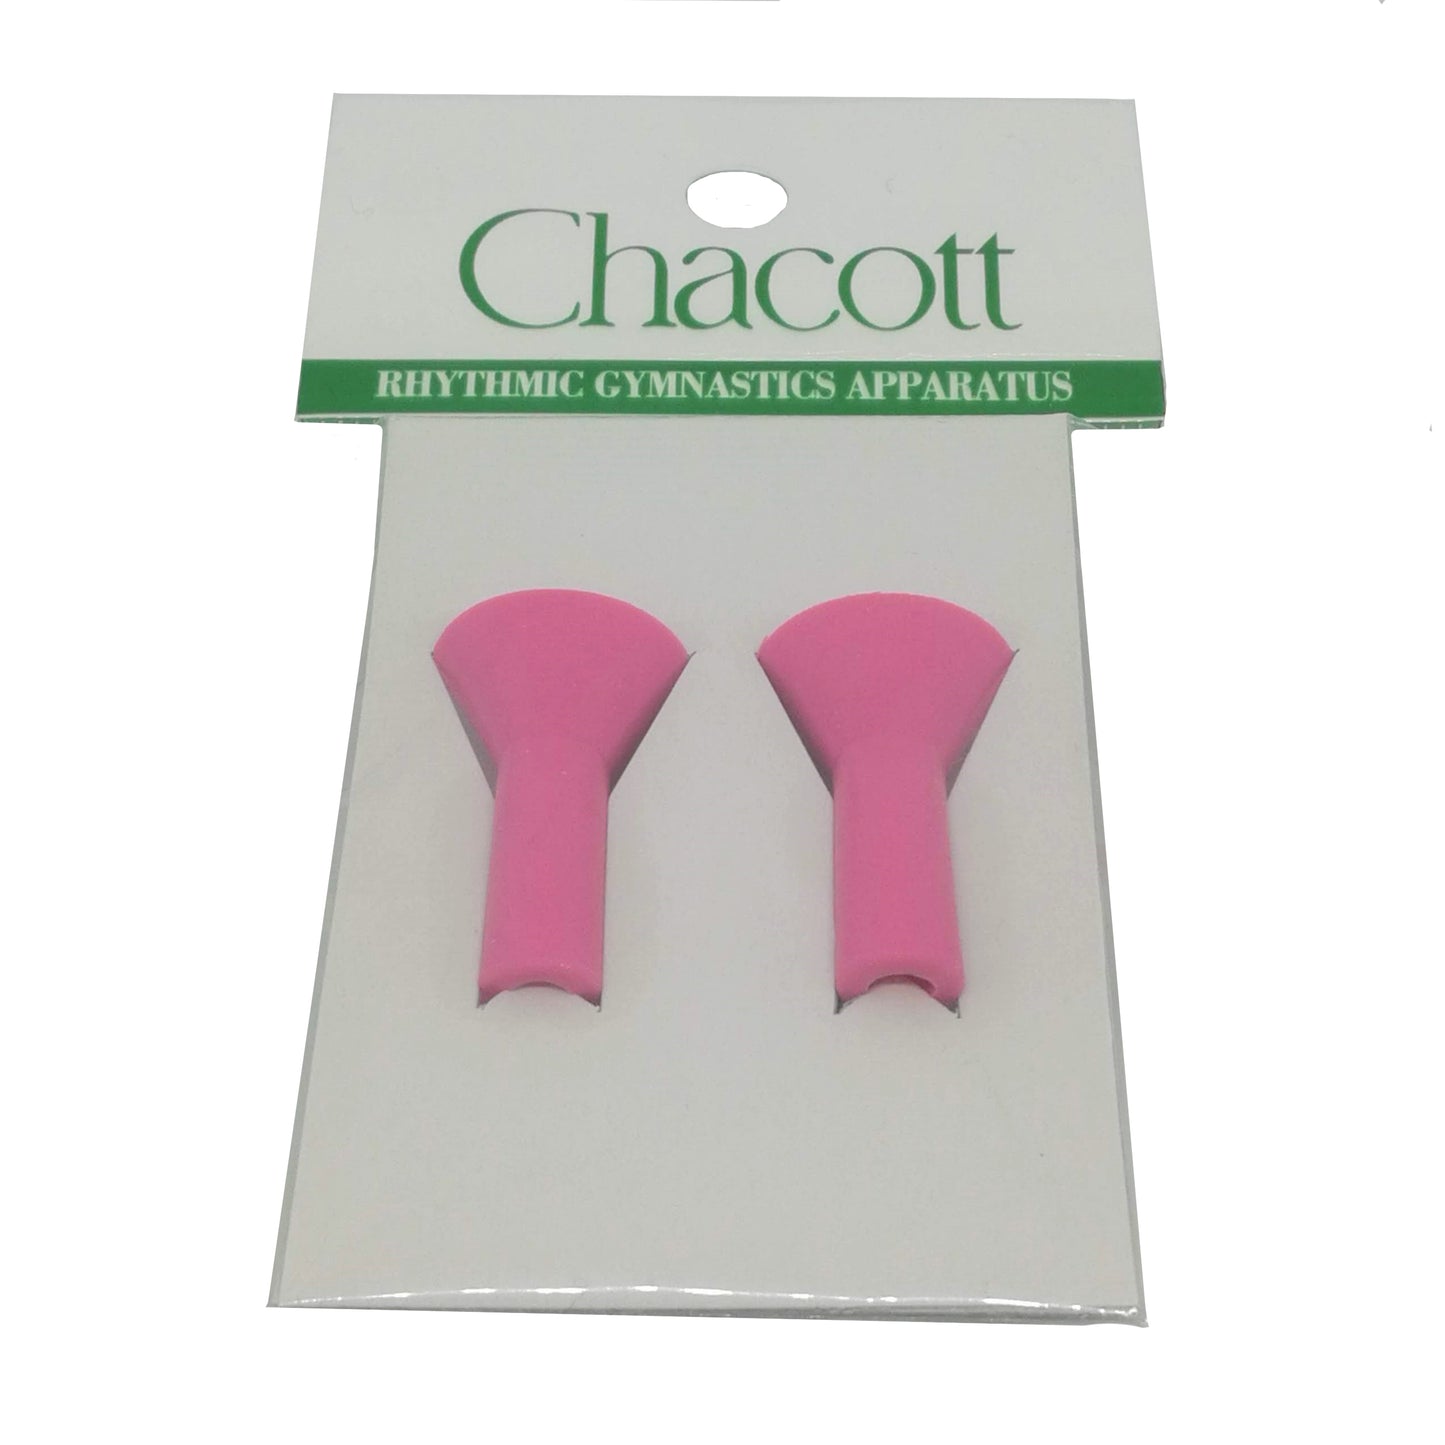 Children´s Safety Stick caps, Chacott